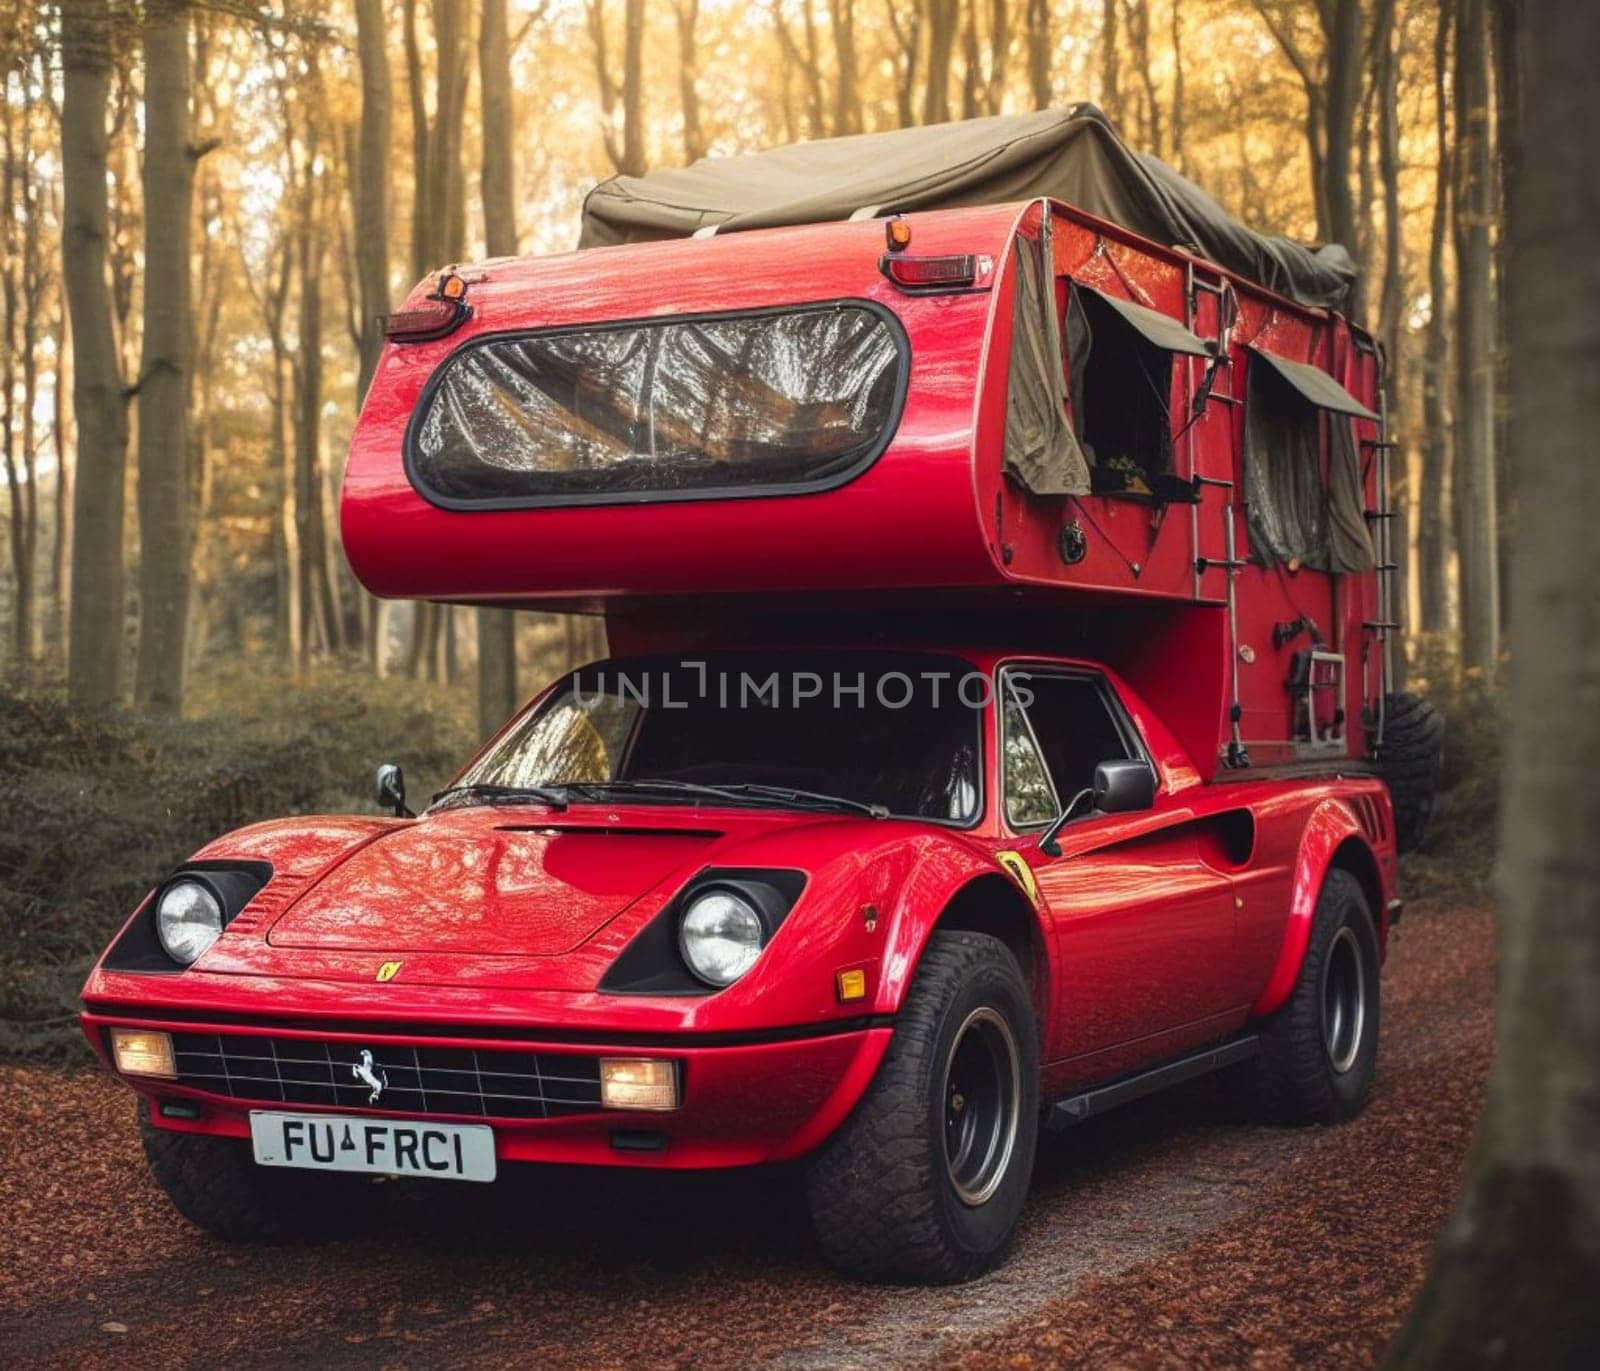 italian red sports car design camper van conversion for the digital nomad and avdenturer weekender by verbano